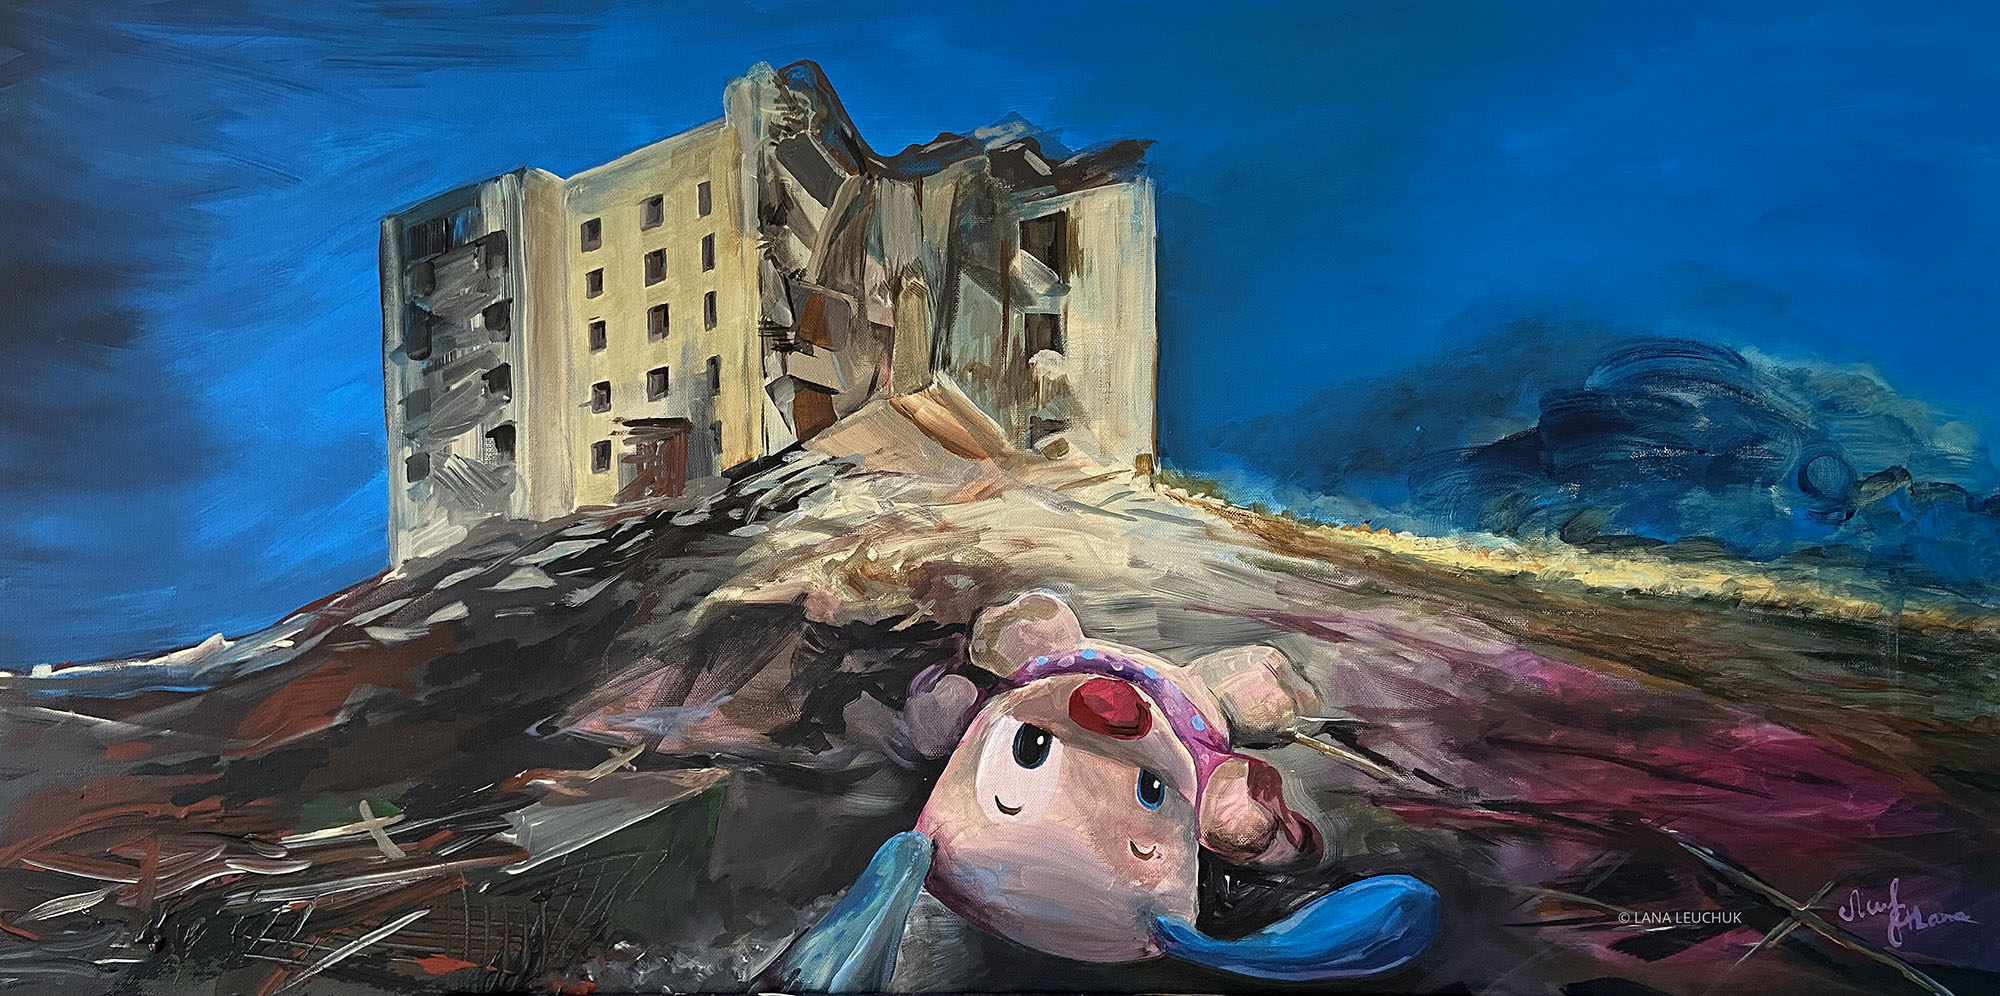 Artist-Lana-Leuchuk-Ruined Lives-acrylic-painting-w